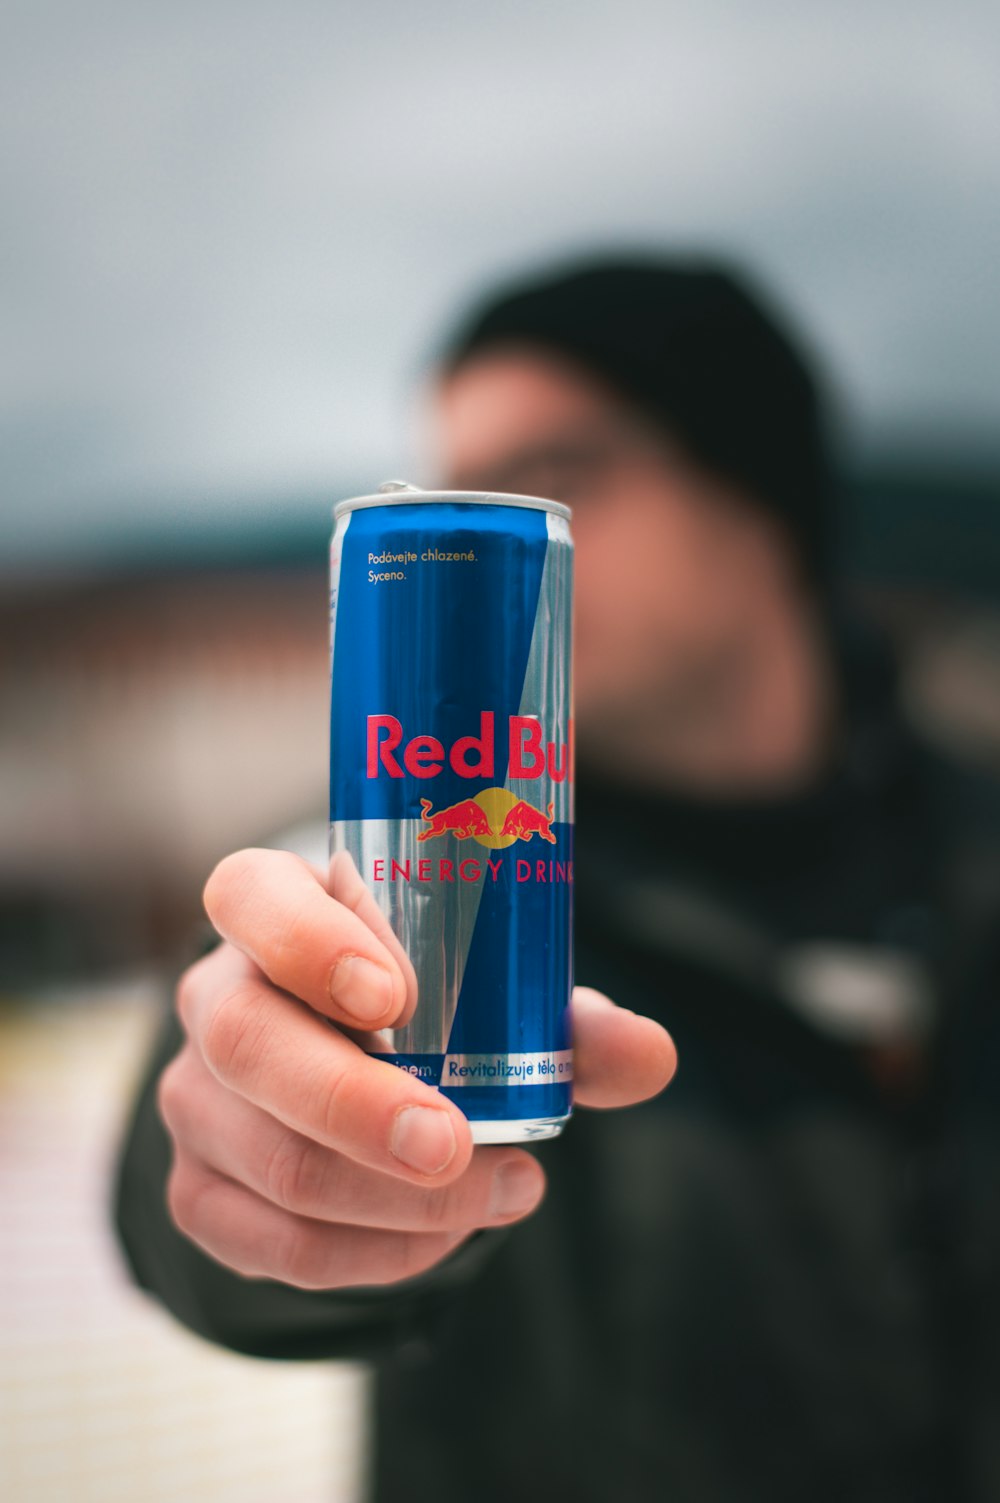 Persona sosteniendo una lata de bebida energética Red Bull